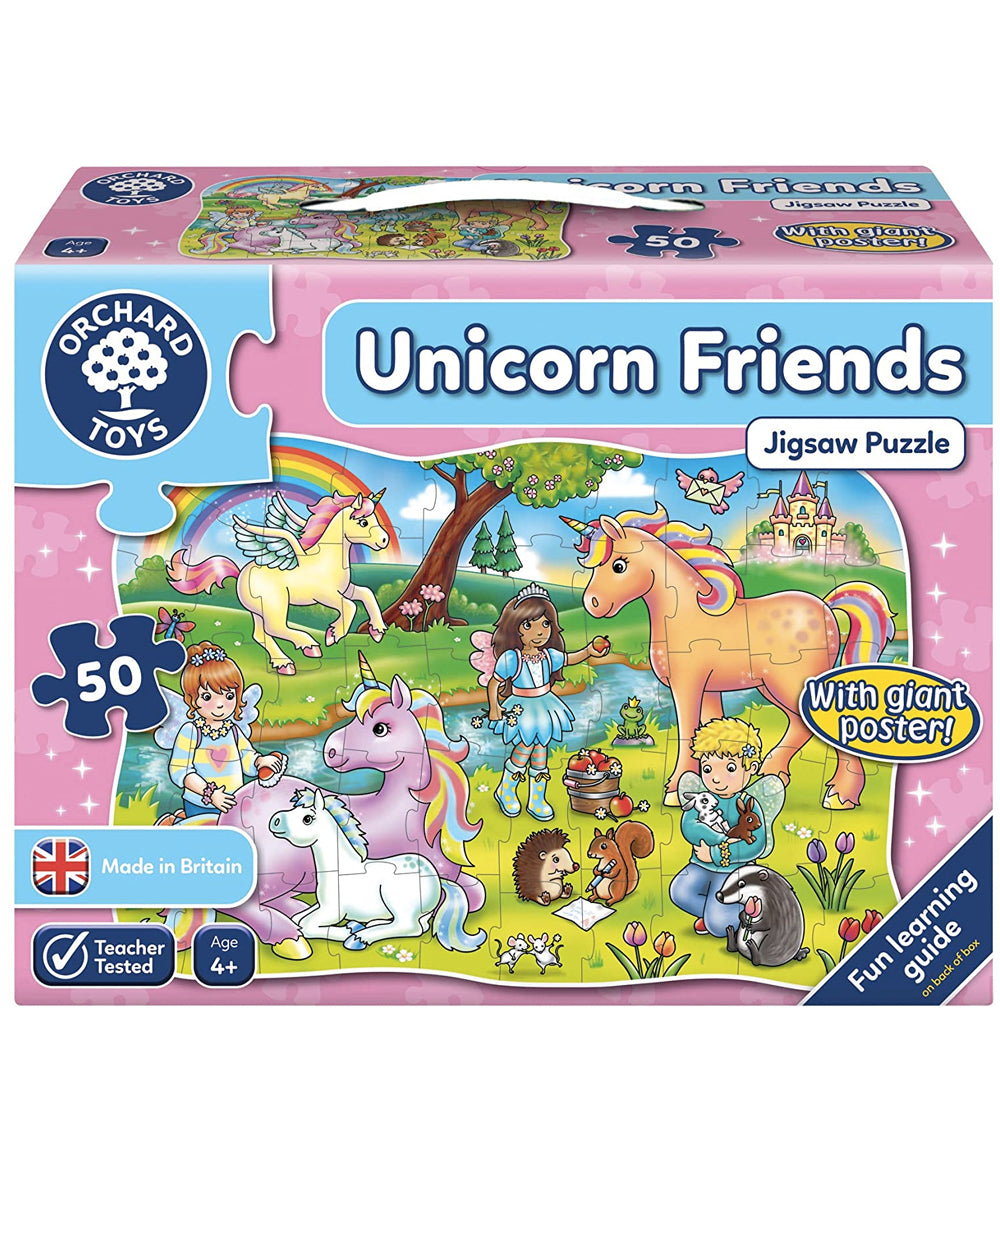 Unicorn Friends Jigsaw Puzzle